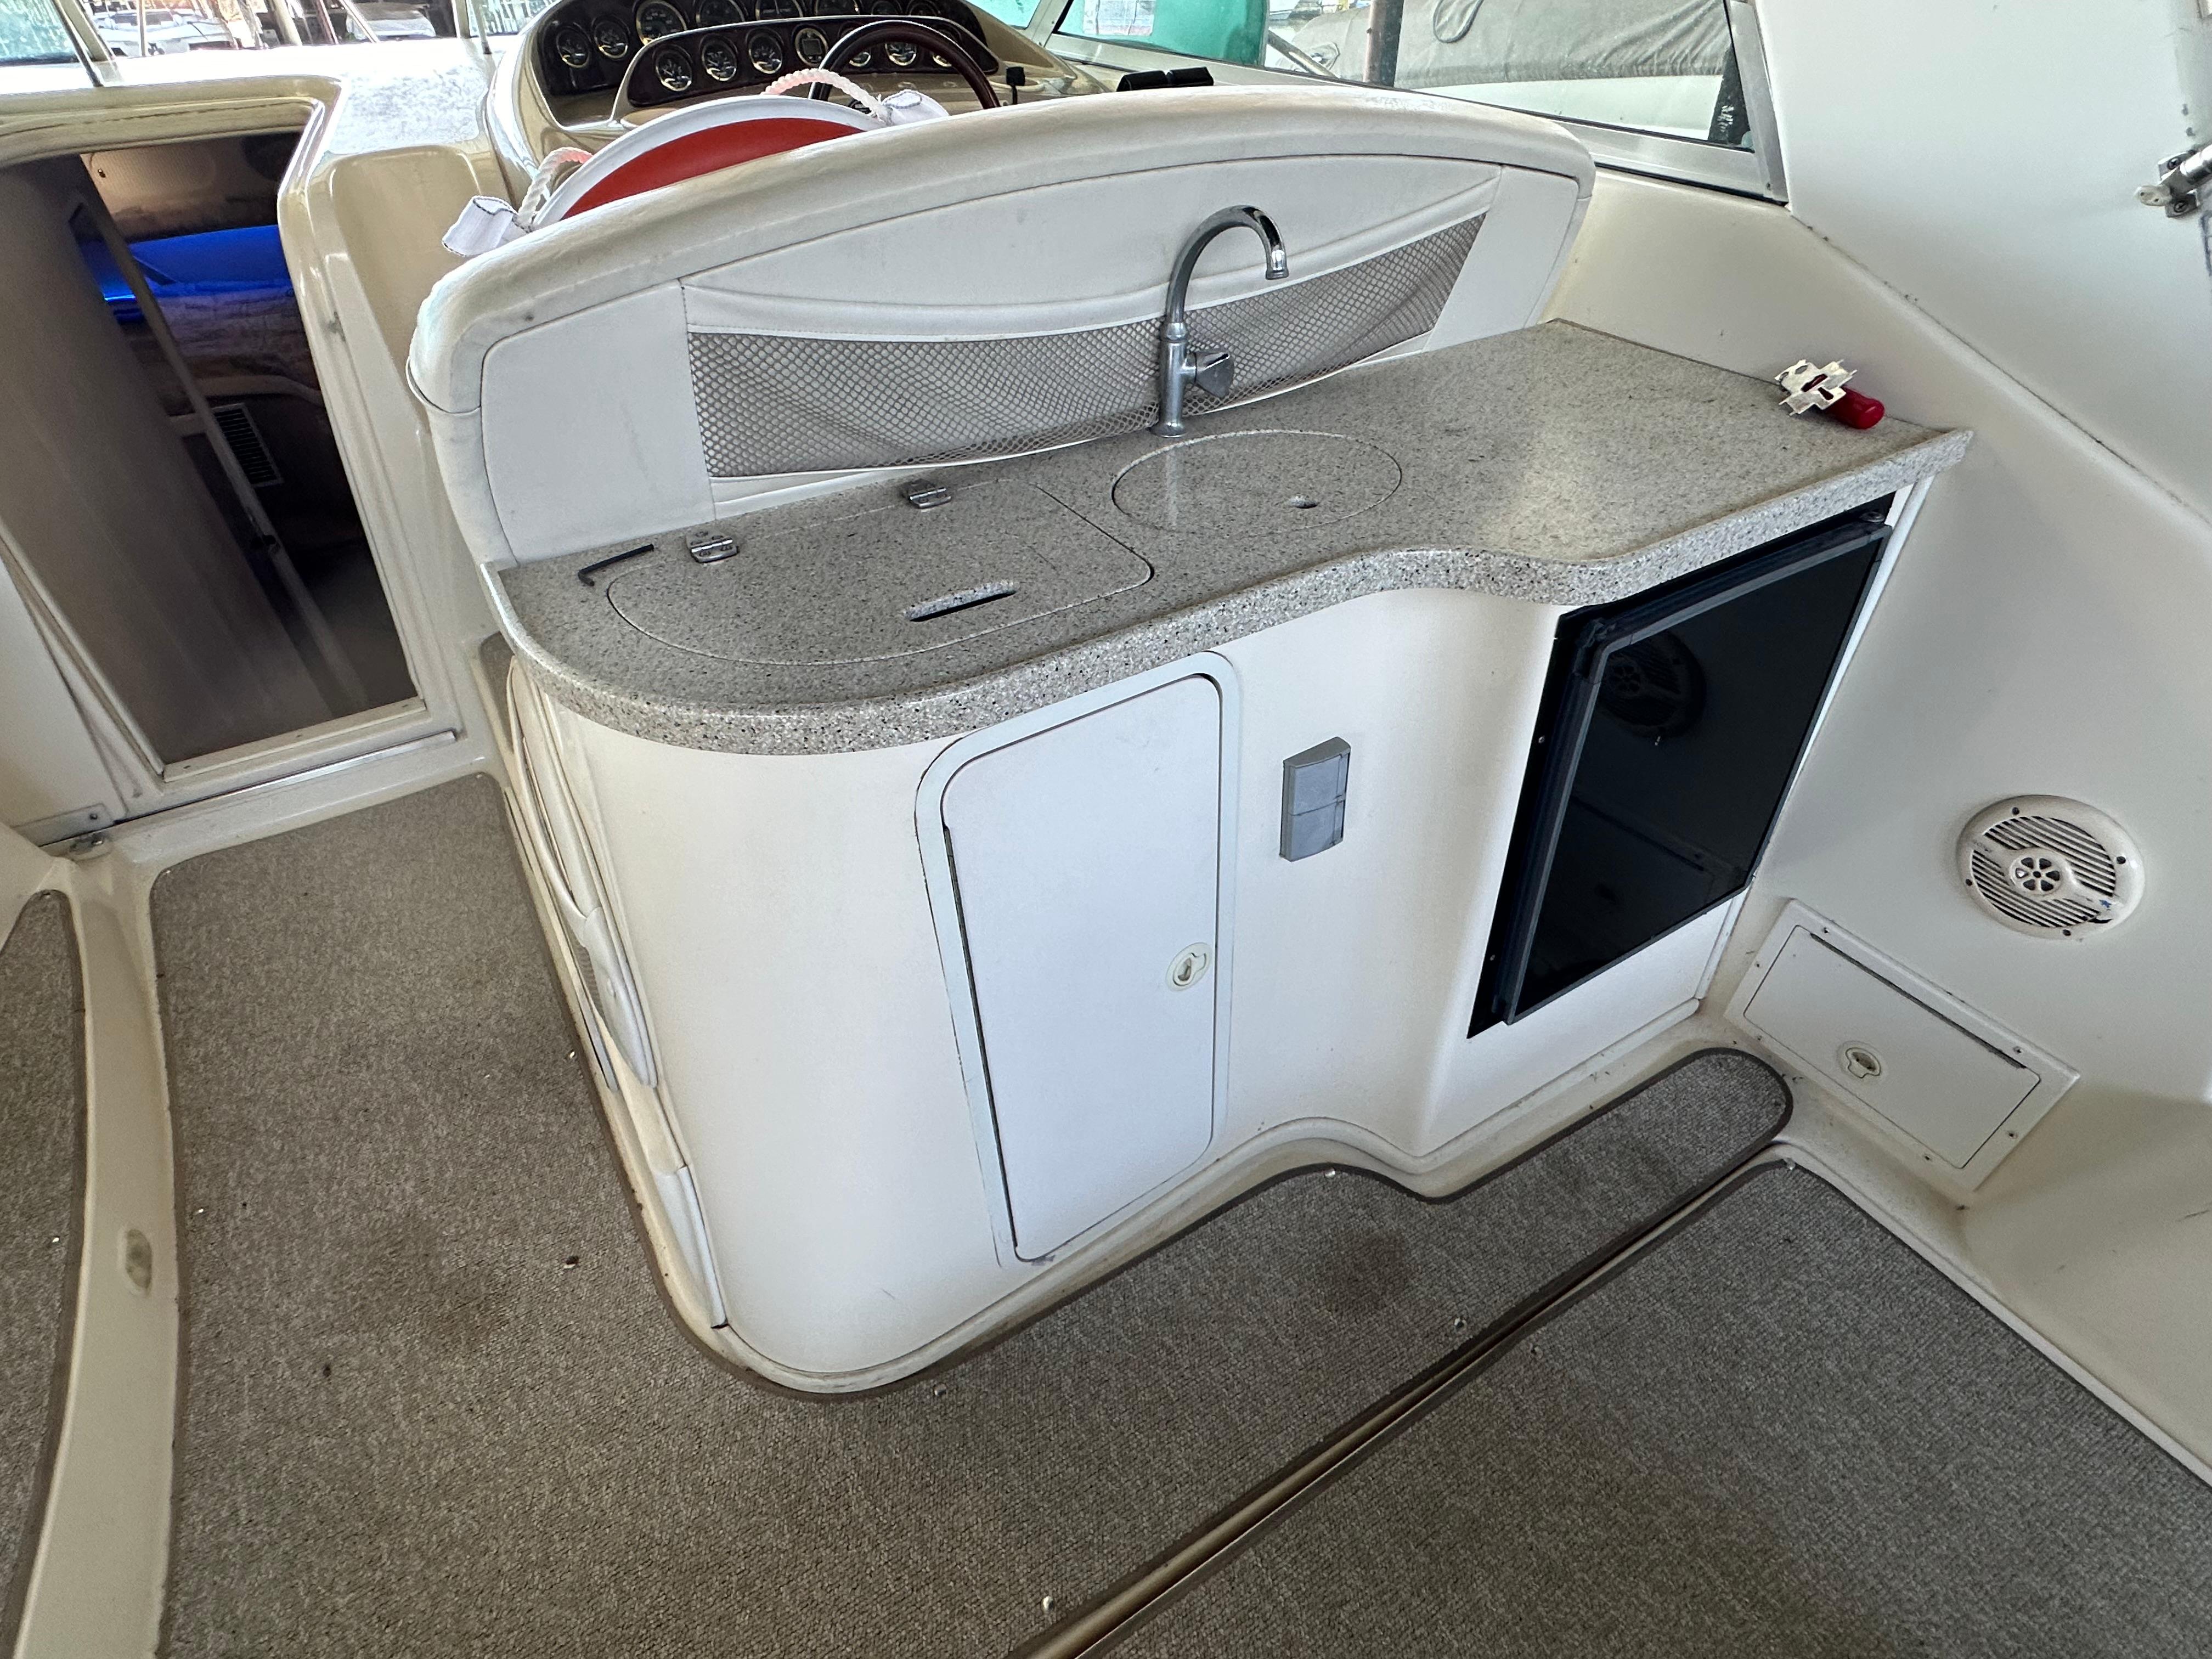 Cockpit Refrigerator, Sink